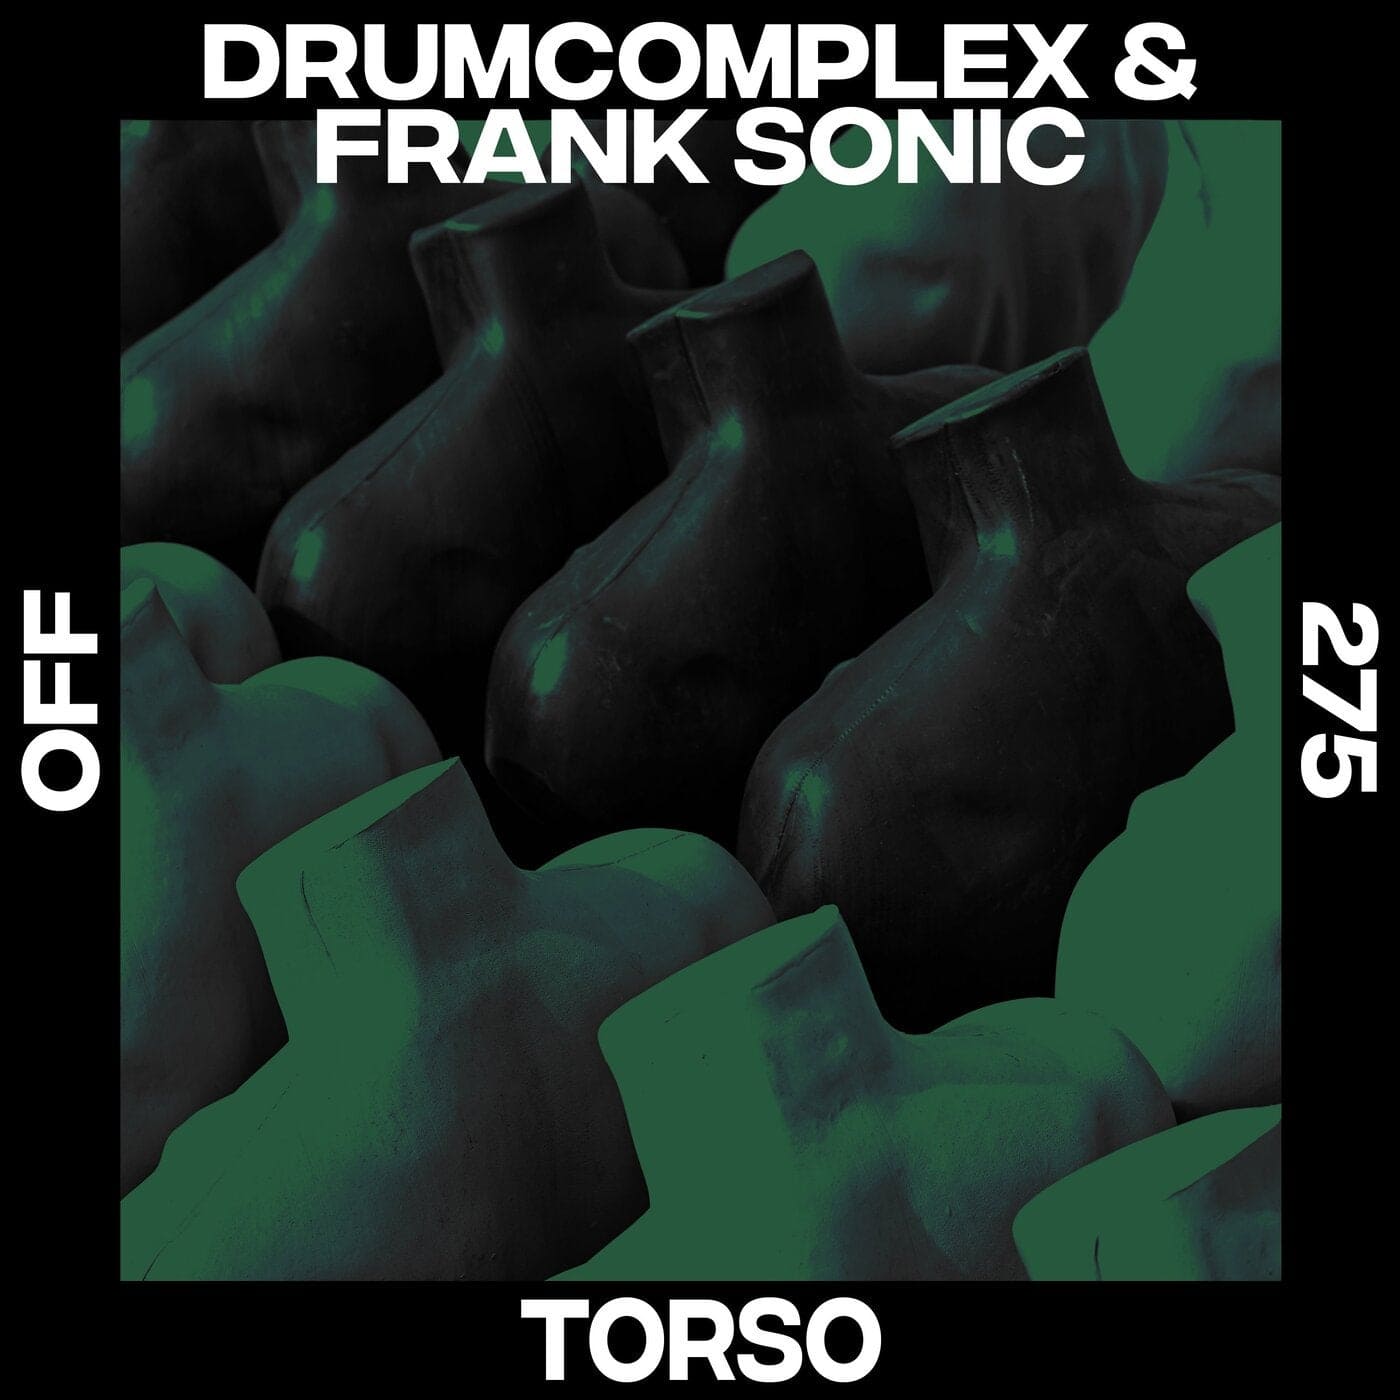 Download Drumcomplex, Frank Sonic - Torso on Electrobuzz